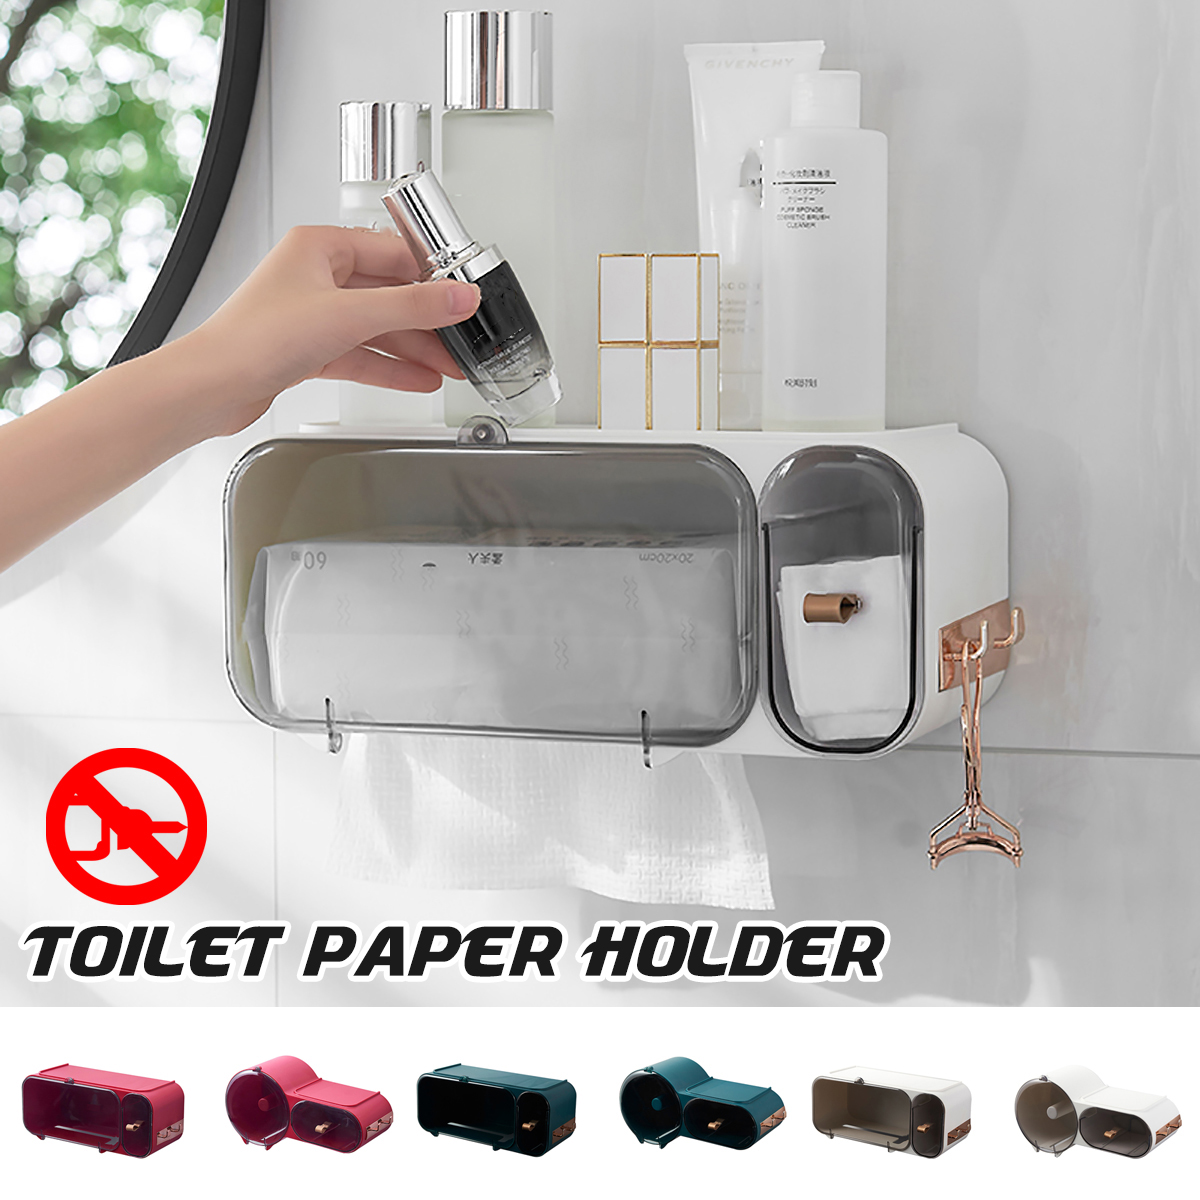 Self-Adhesive-Toilet-Paper-Holder-Multifunction-Bathroom-Stand-Waterproof-Wall-Mount-Toilet-Paper-Ho-1027369-1